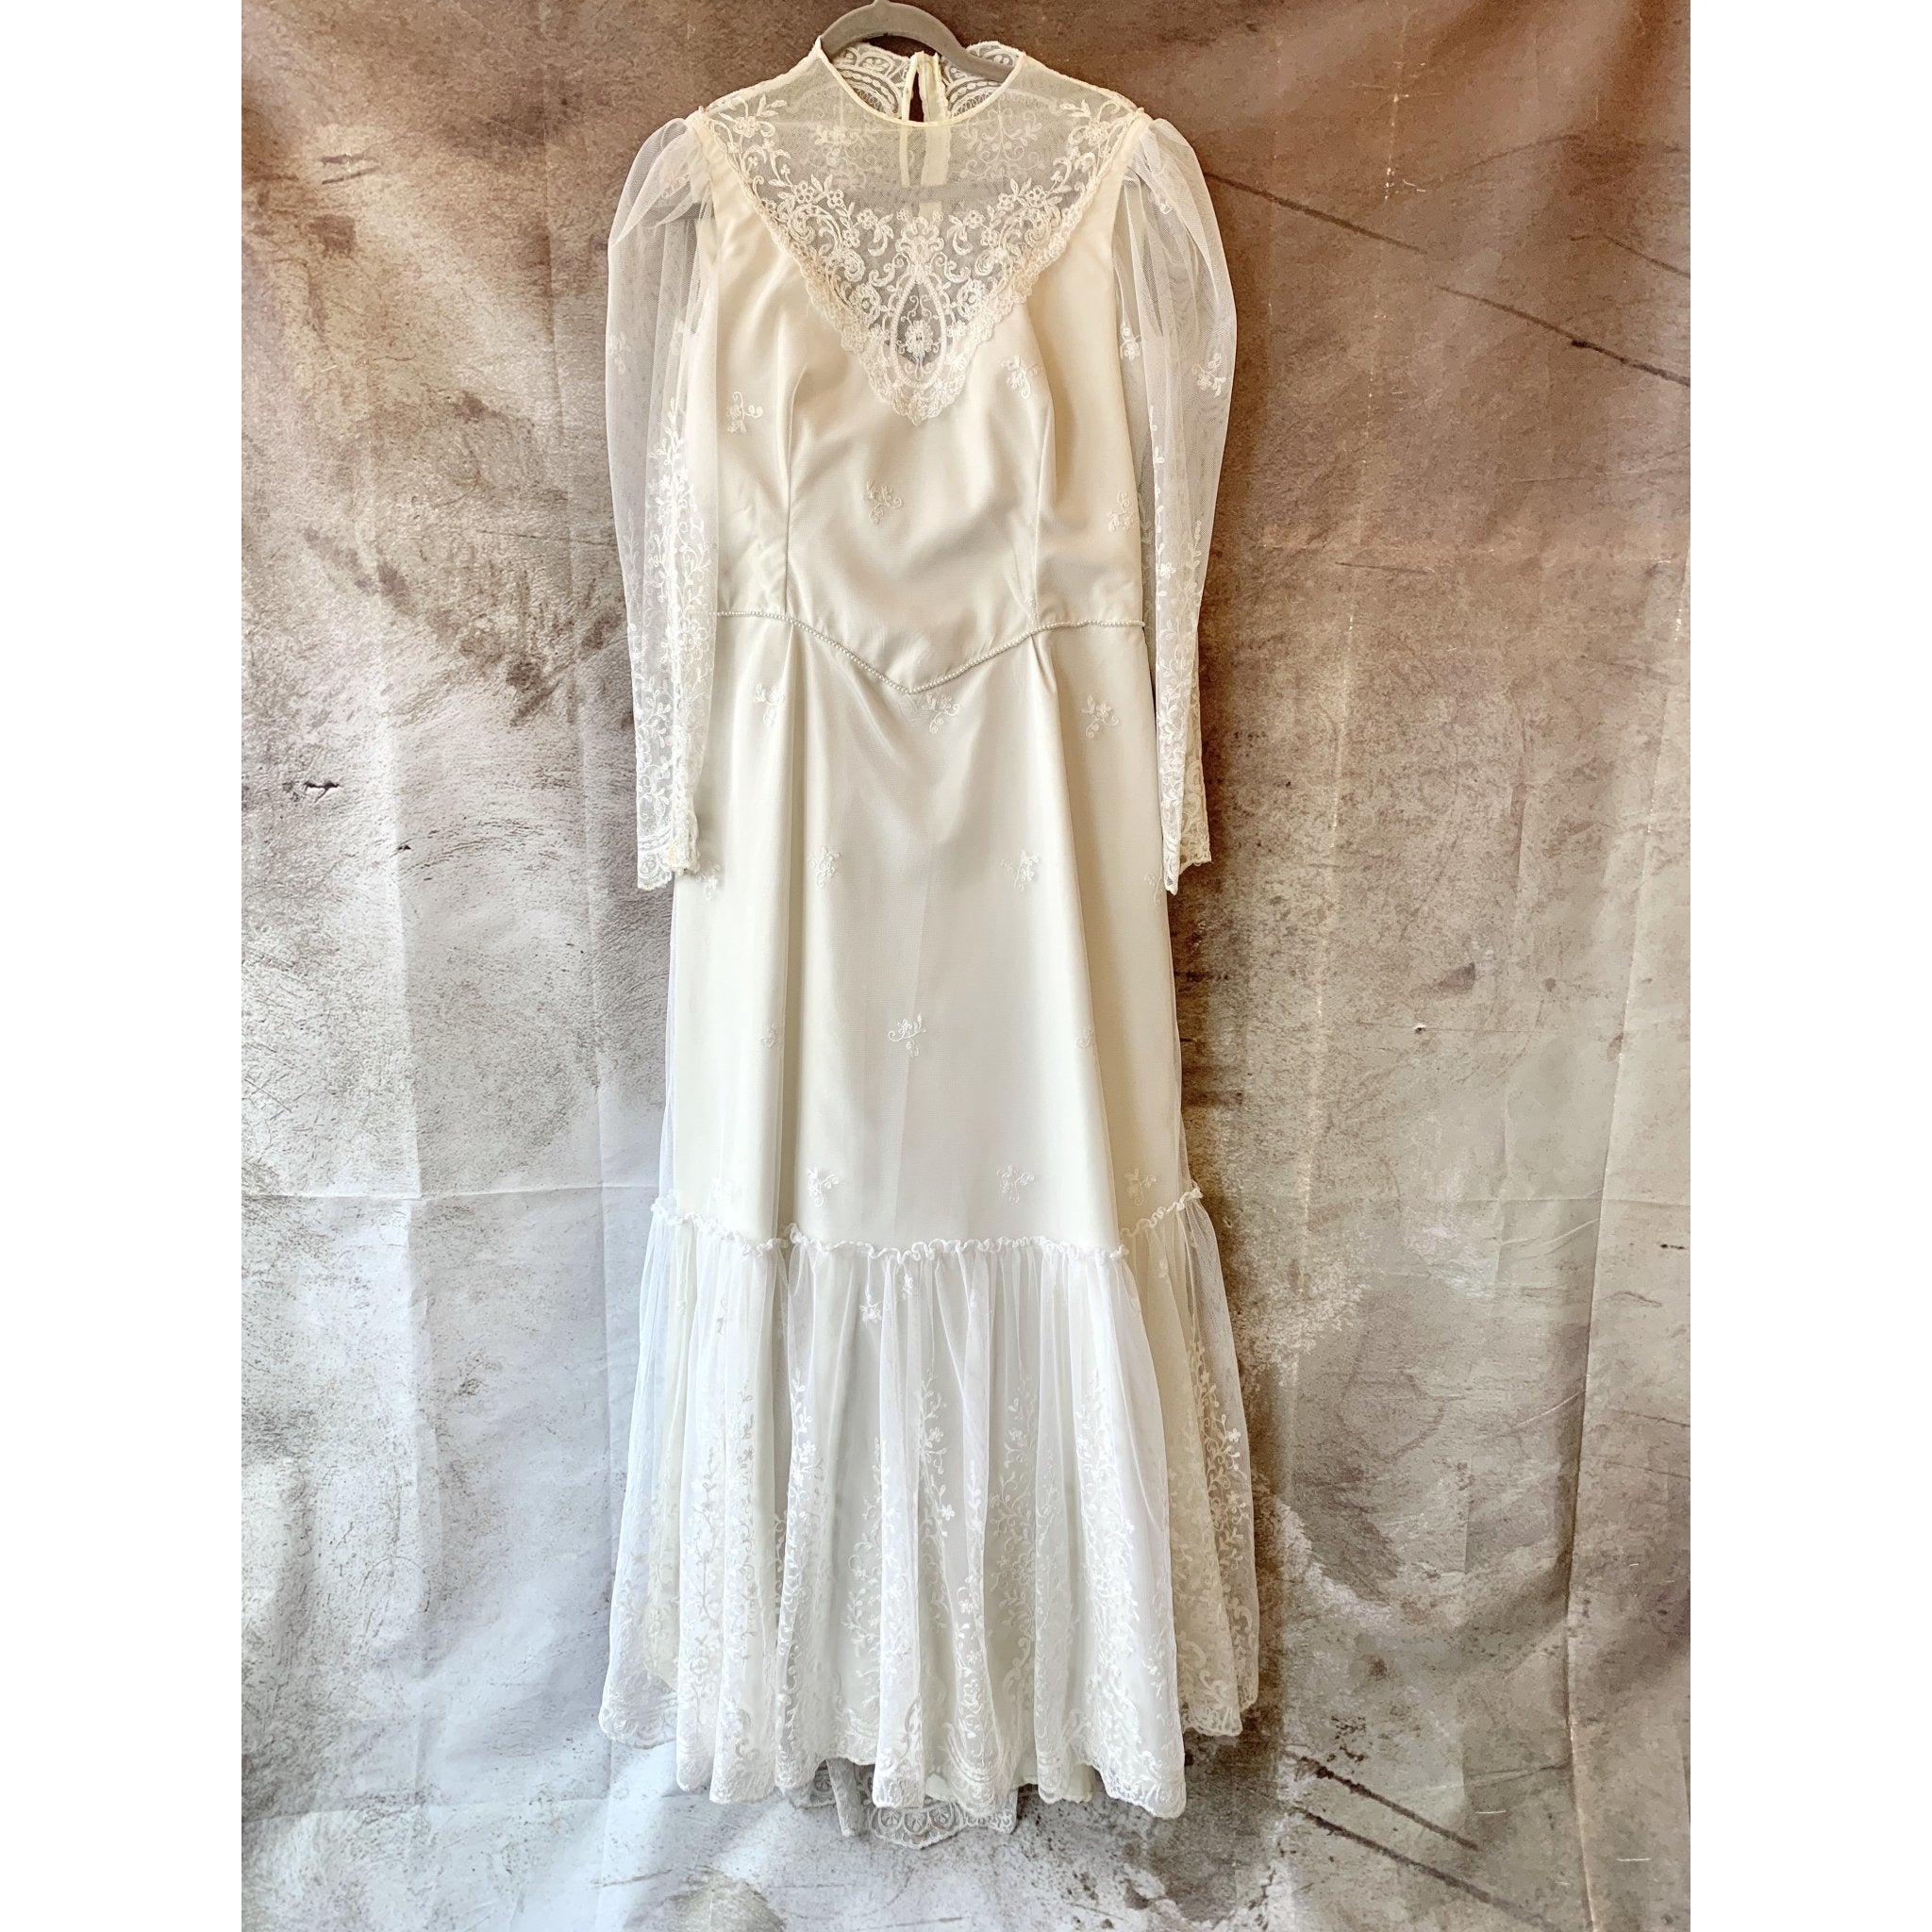 Vintage Wedding Dress - Cora